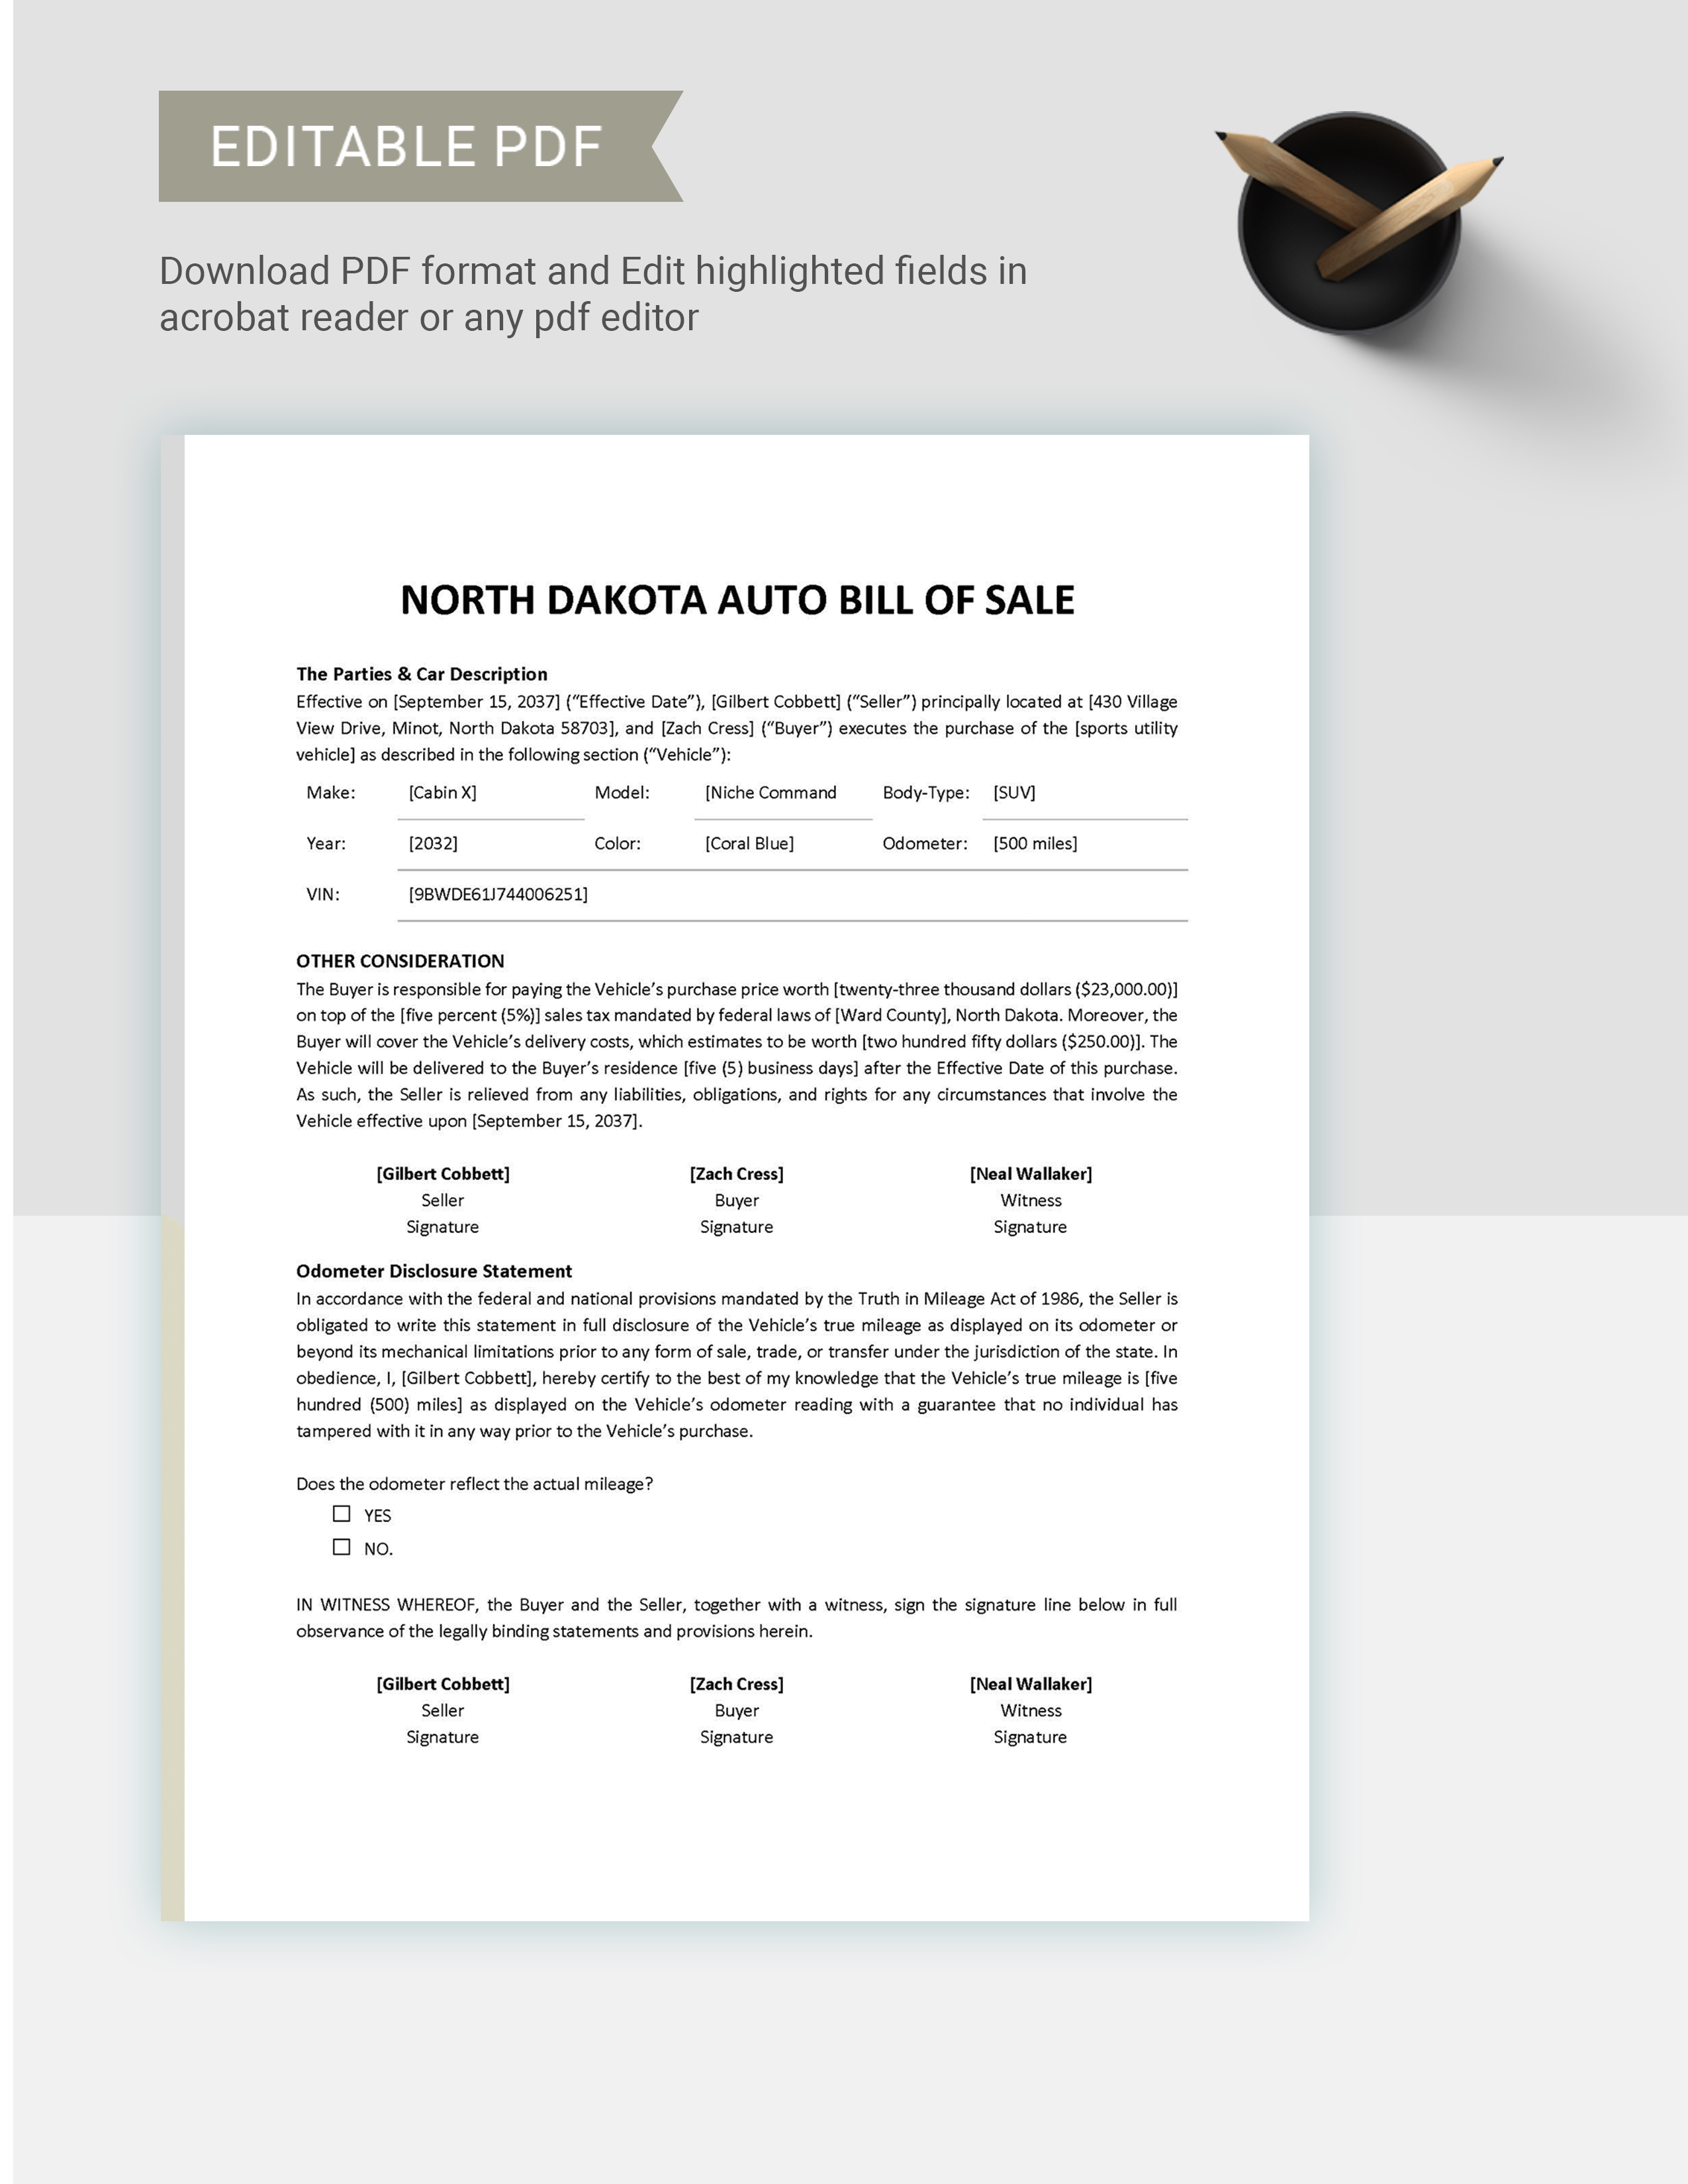 North Dakota Auto Bill of Sale Template